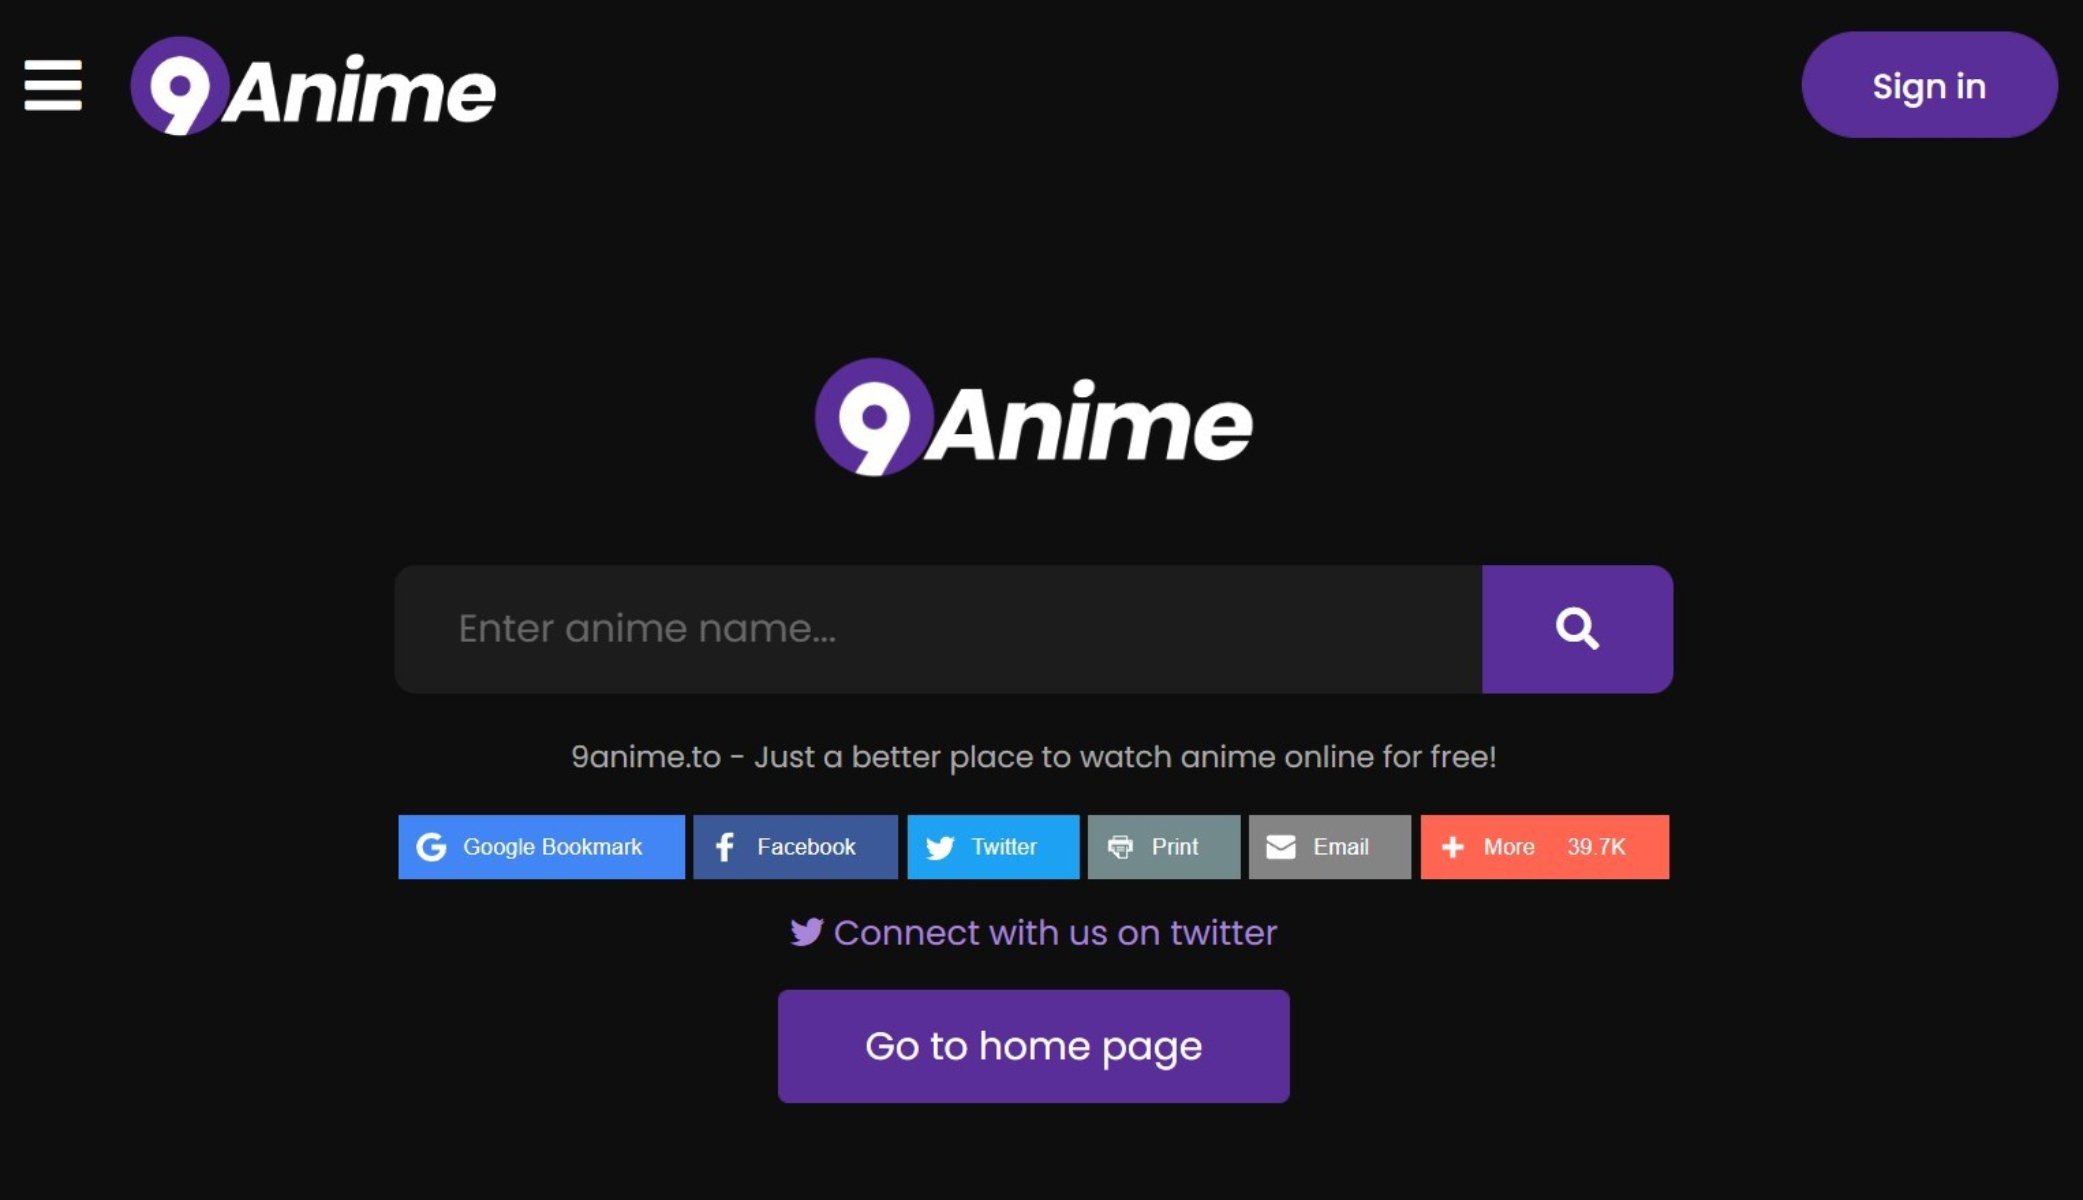 Anime - PSD Template for Anime Video Sharing Website - TemplatesJungle.com